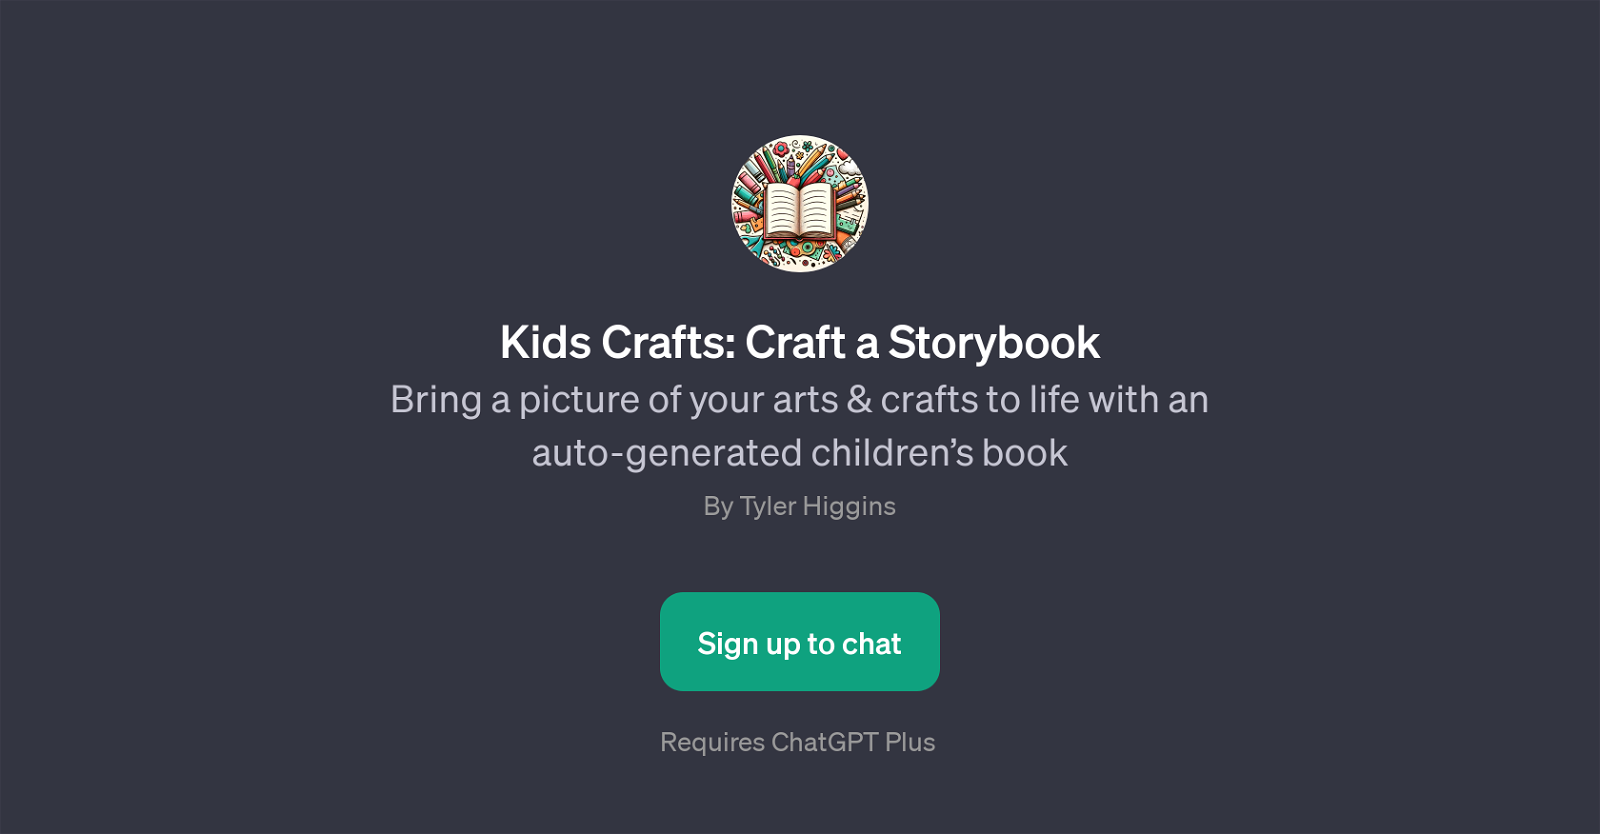 Kids Crafts: Craft a Storybook website